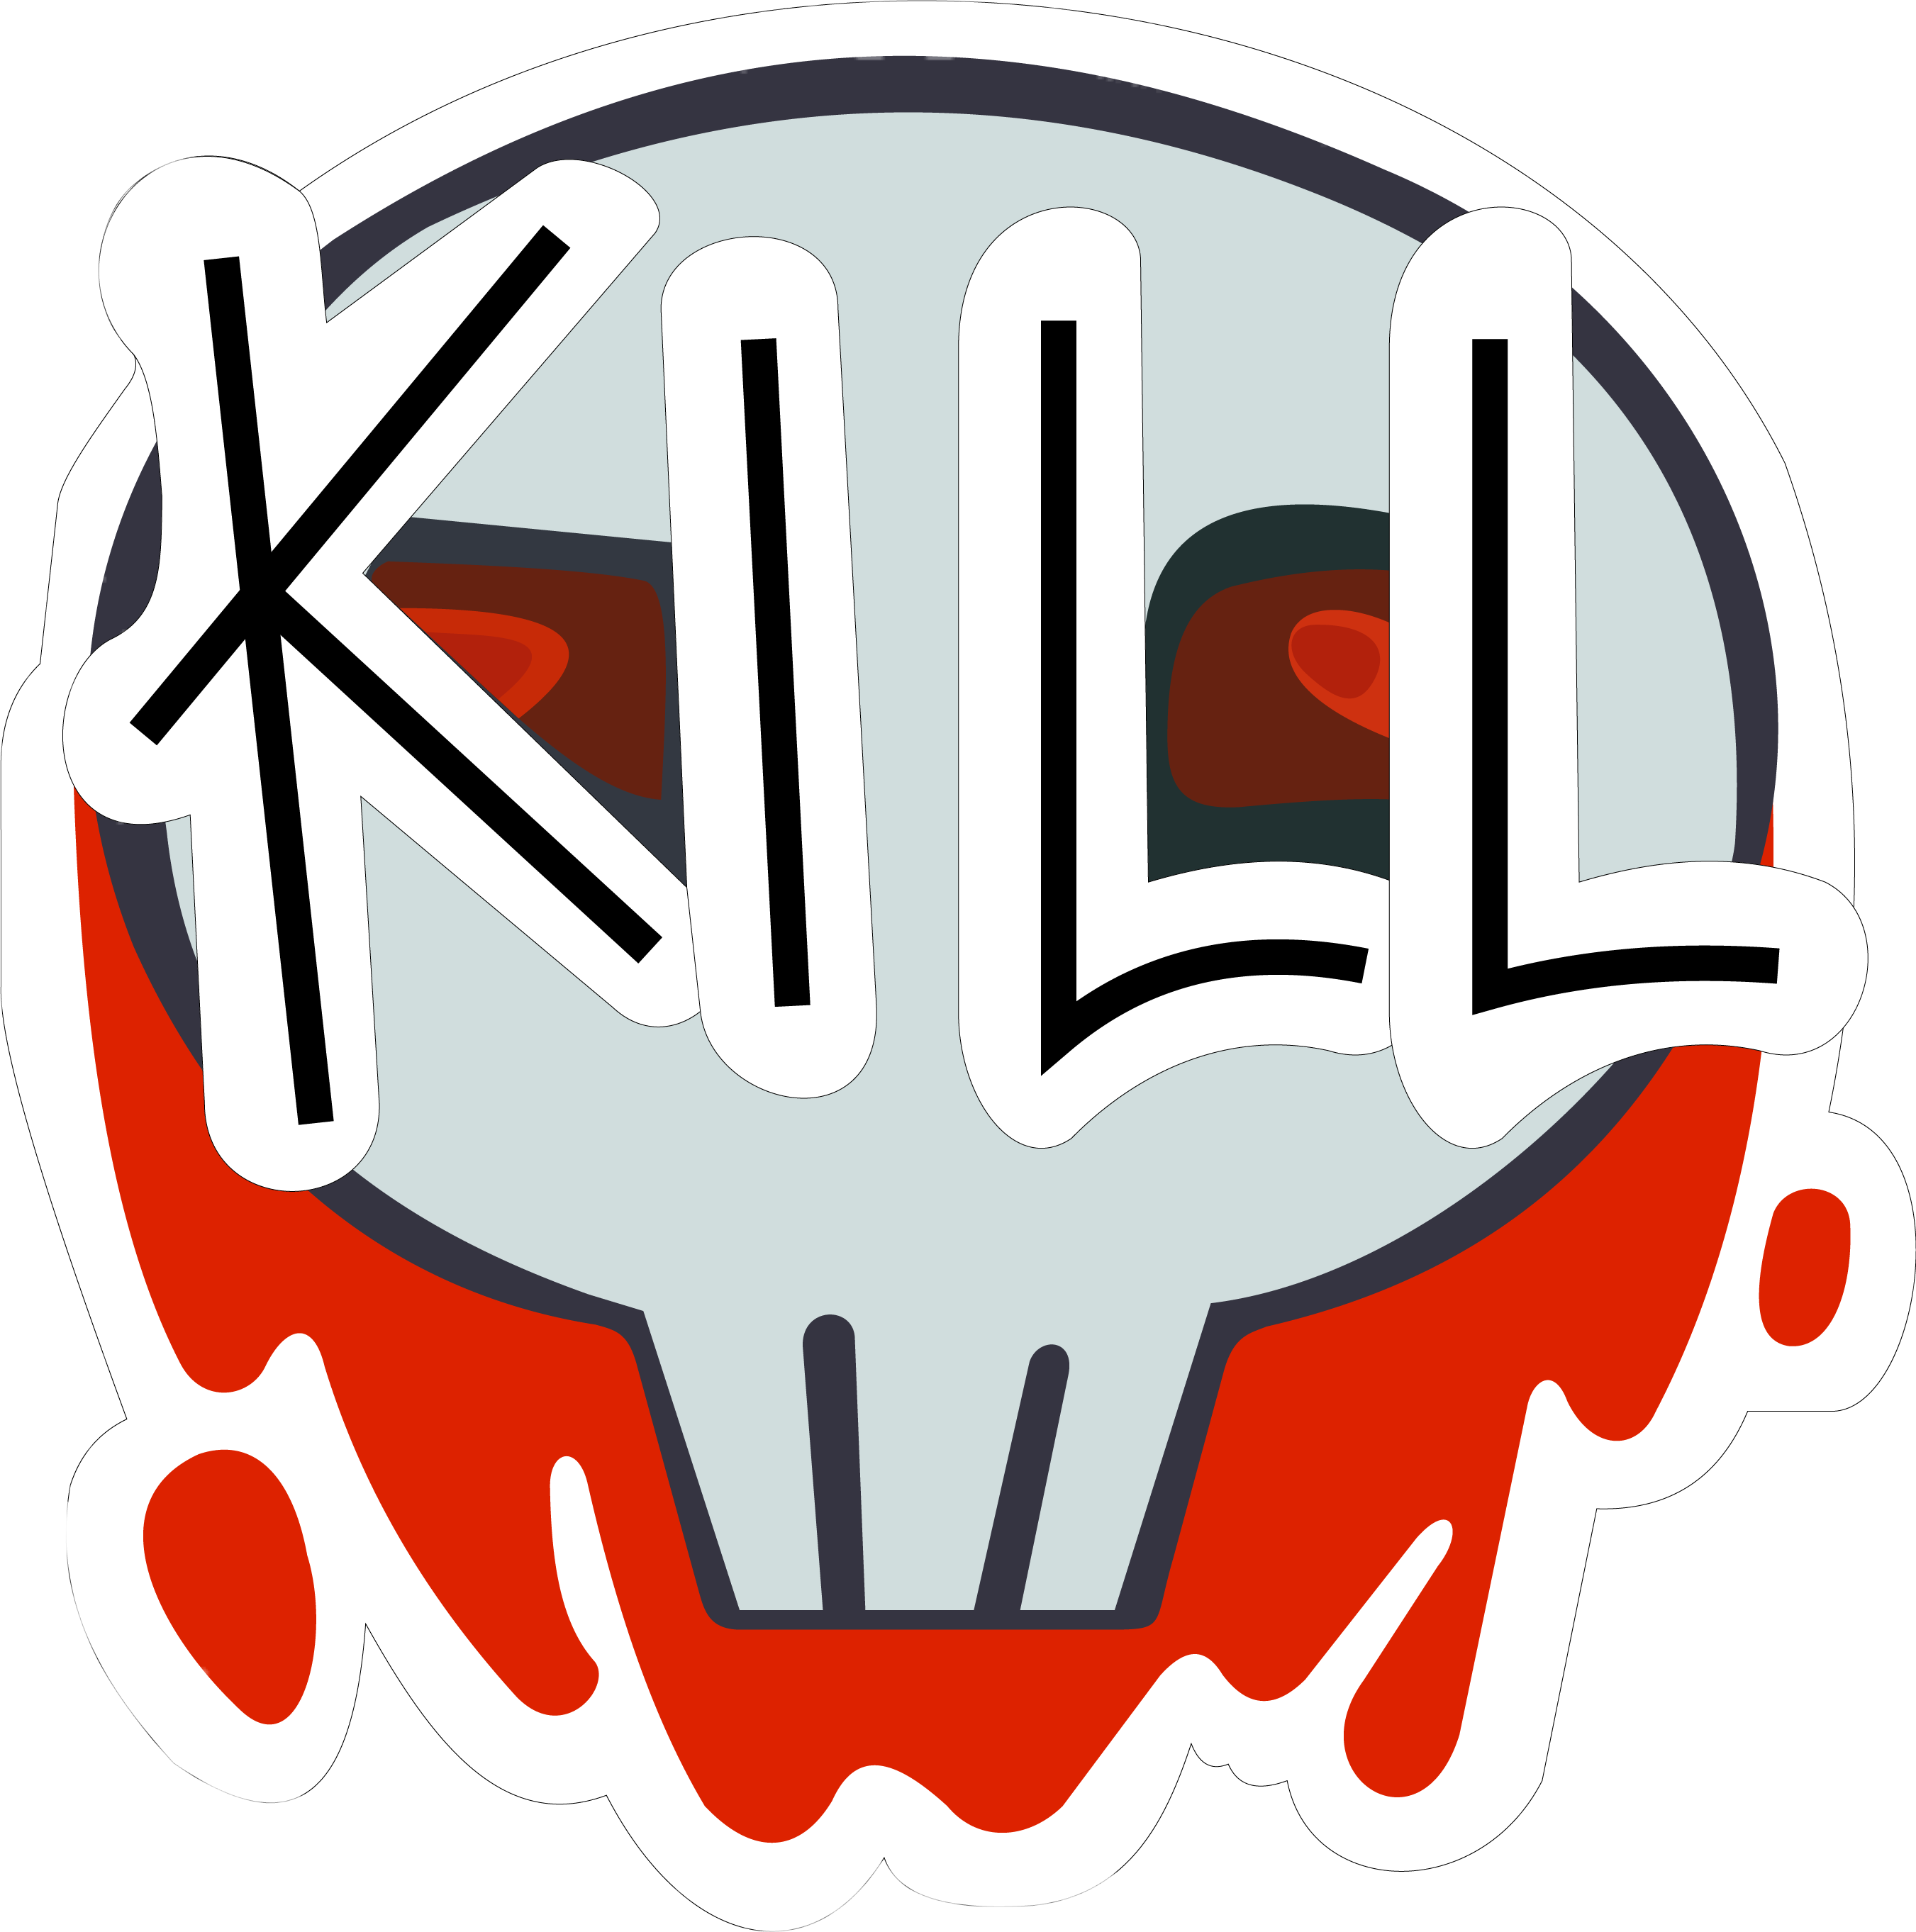 killbutton amongus imposter sticker by @walnutskate.